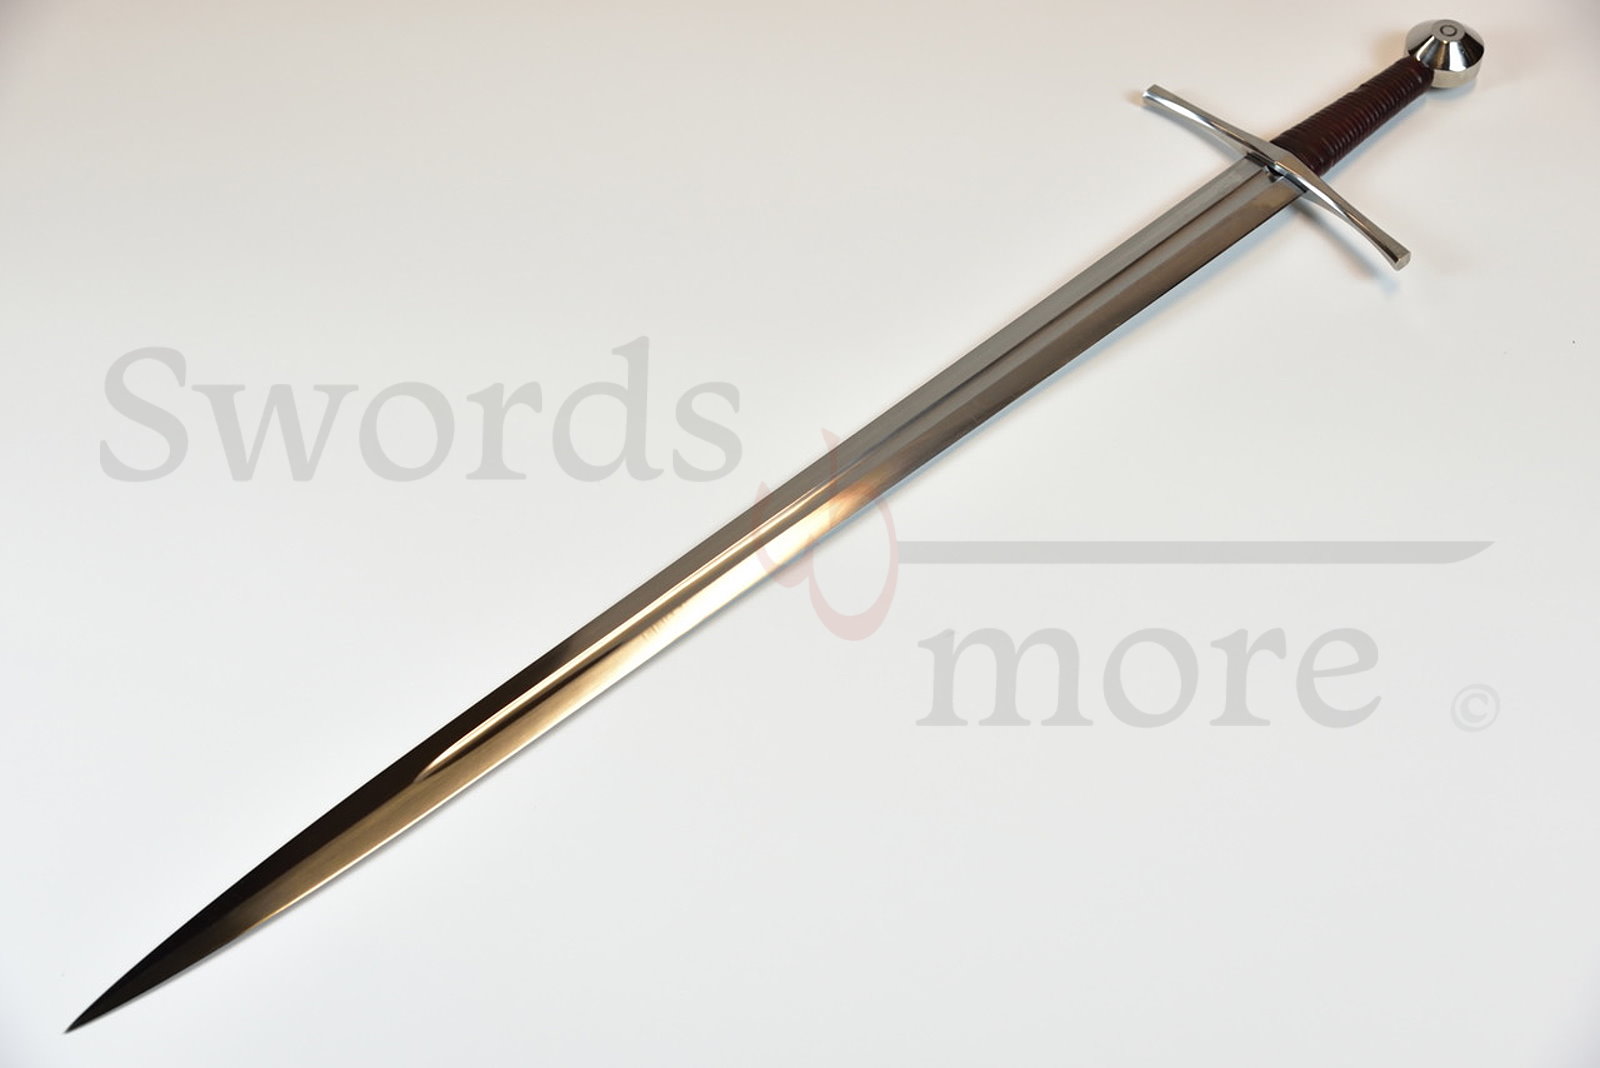 Oakeshott Xa Medieval Sword - The Knight